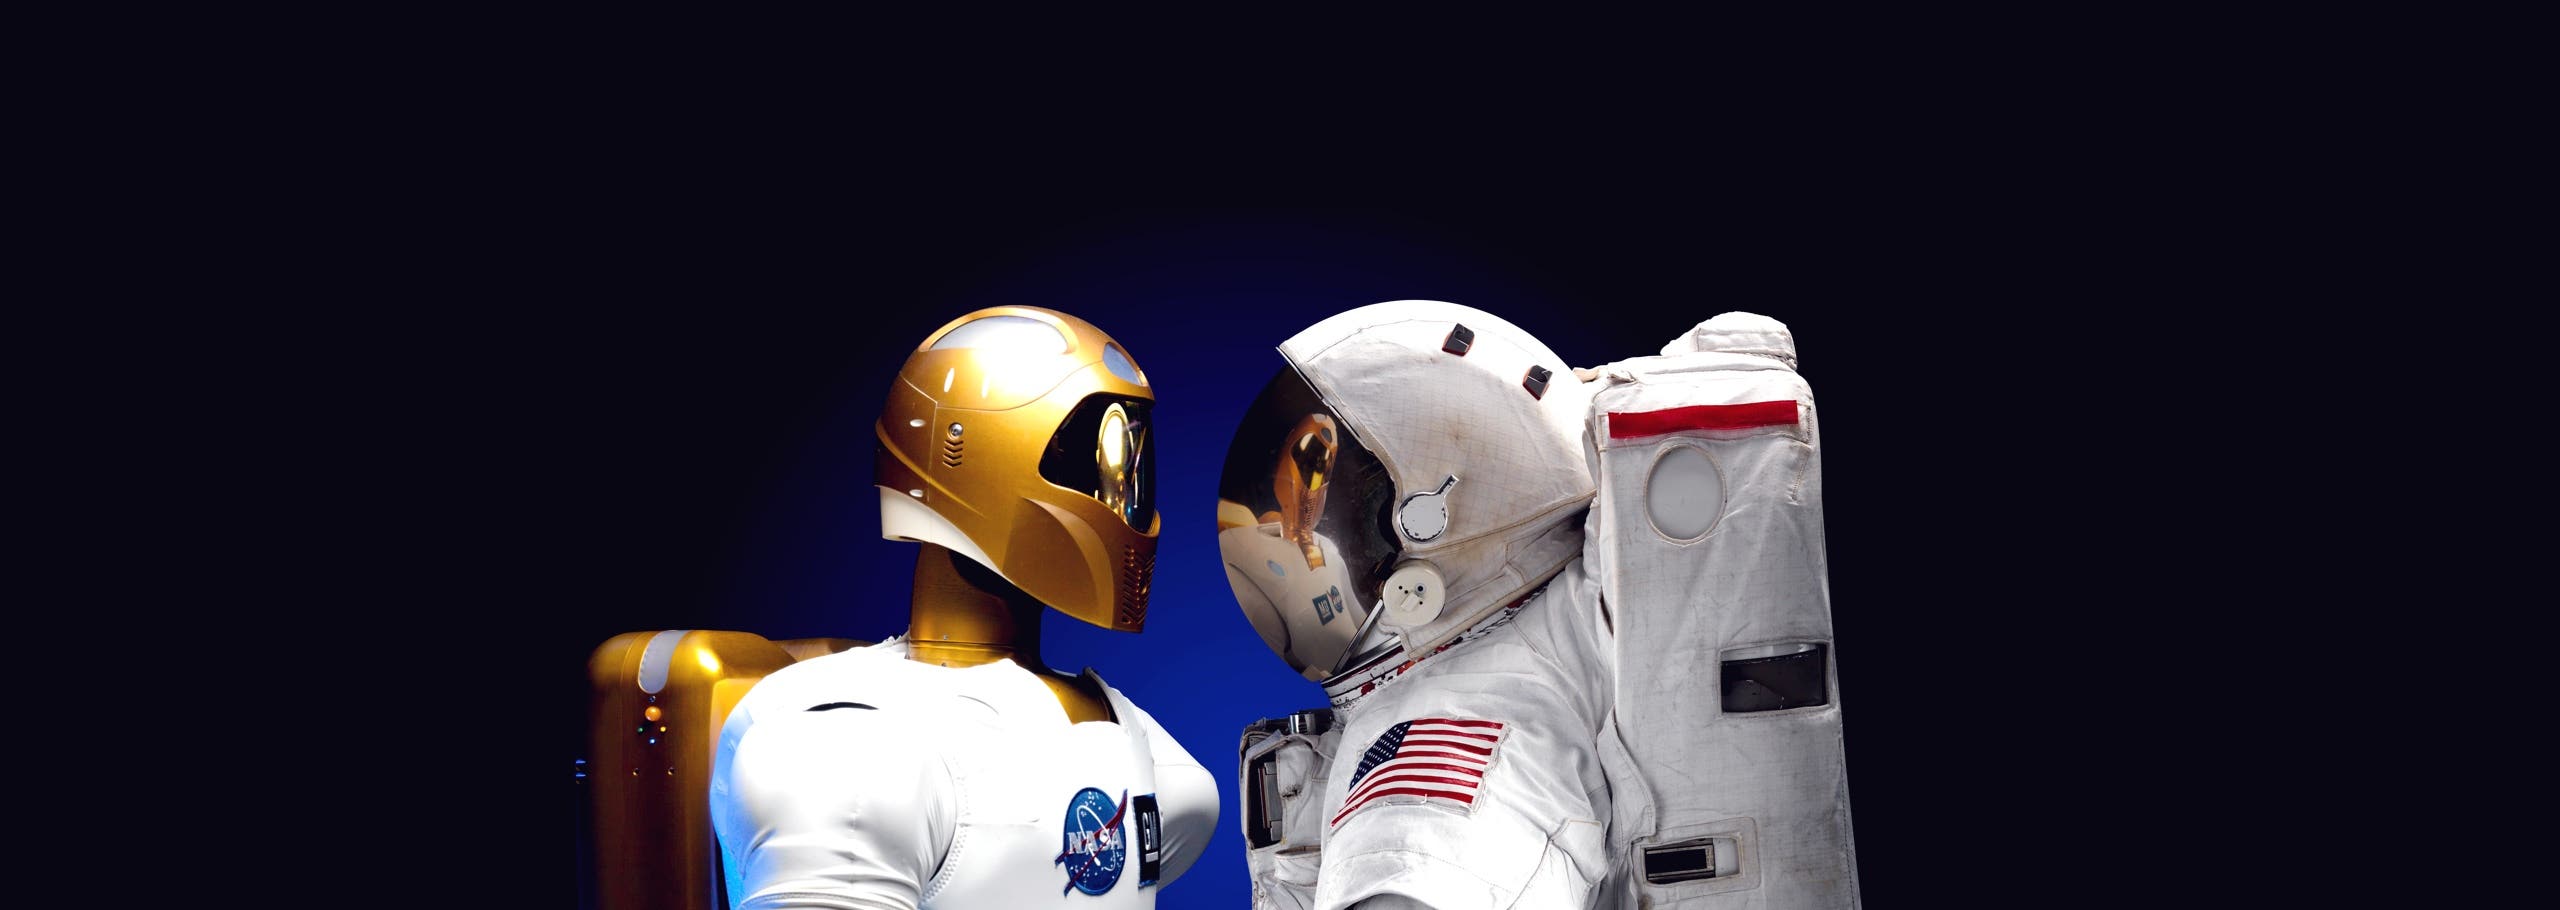  Imagen de fondo de robonauta y astronauta frente a frente